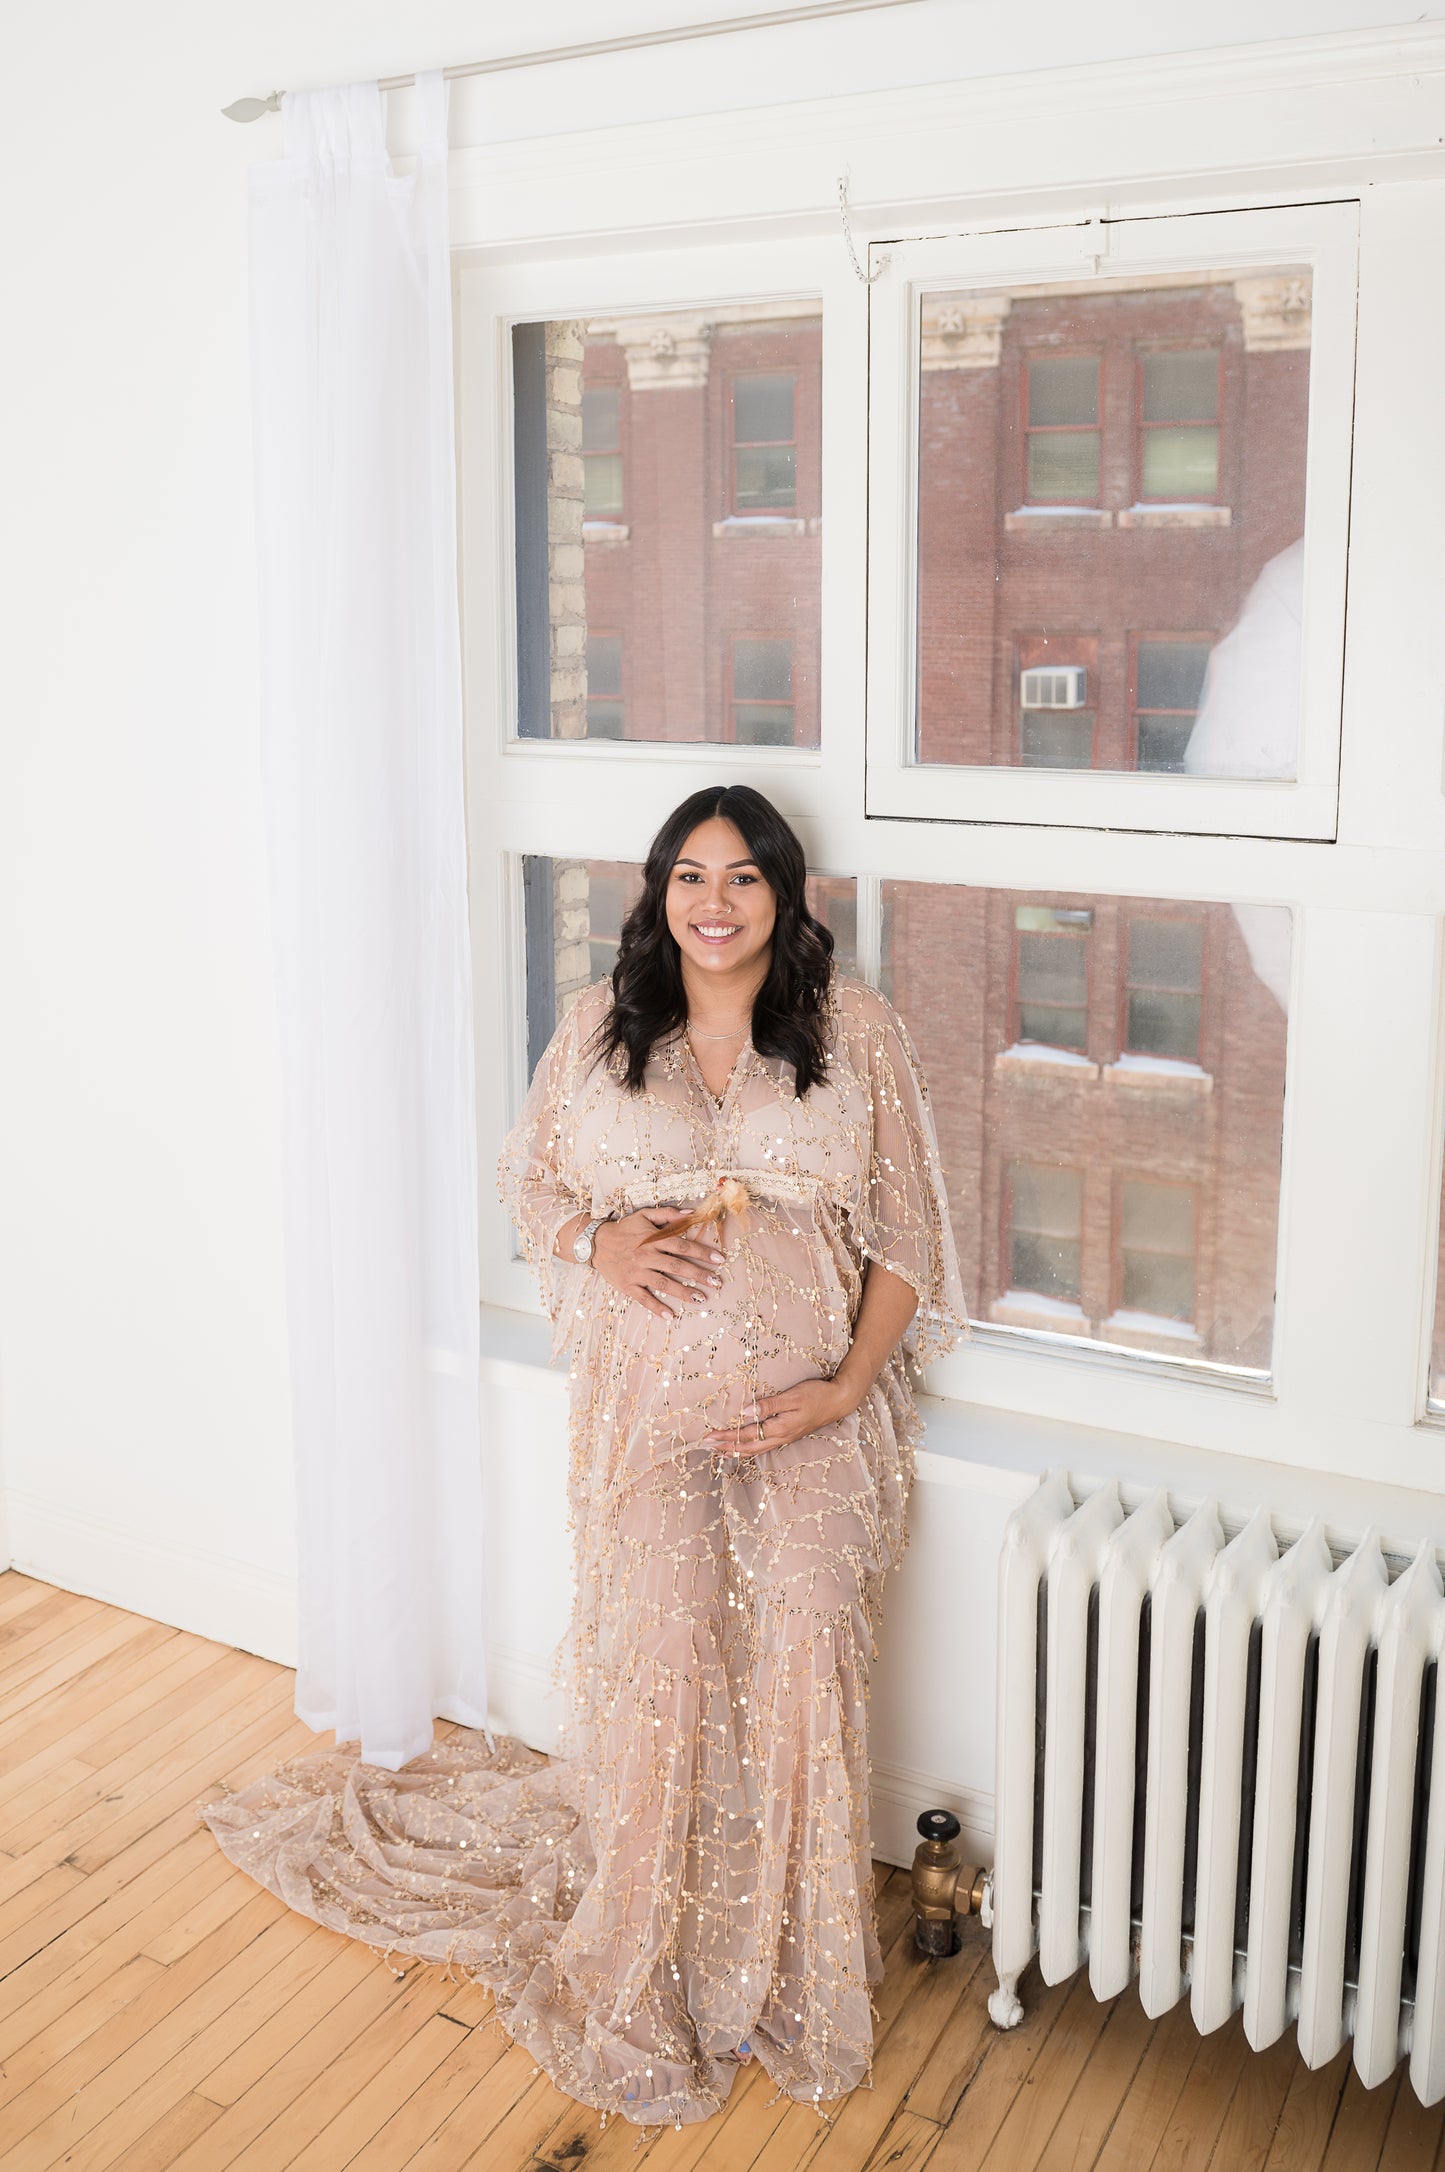 “Maggie” Golden Sequin Tassels Maternity Gown